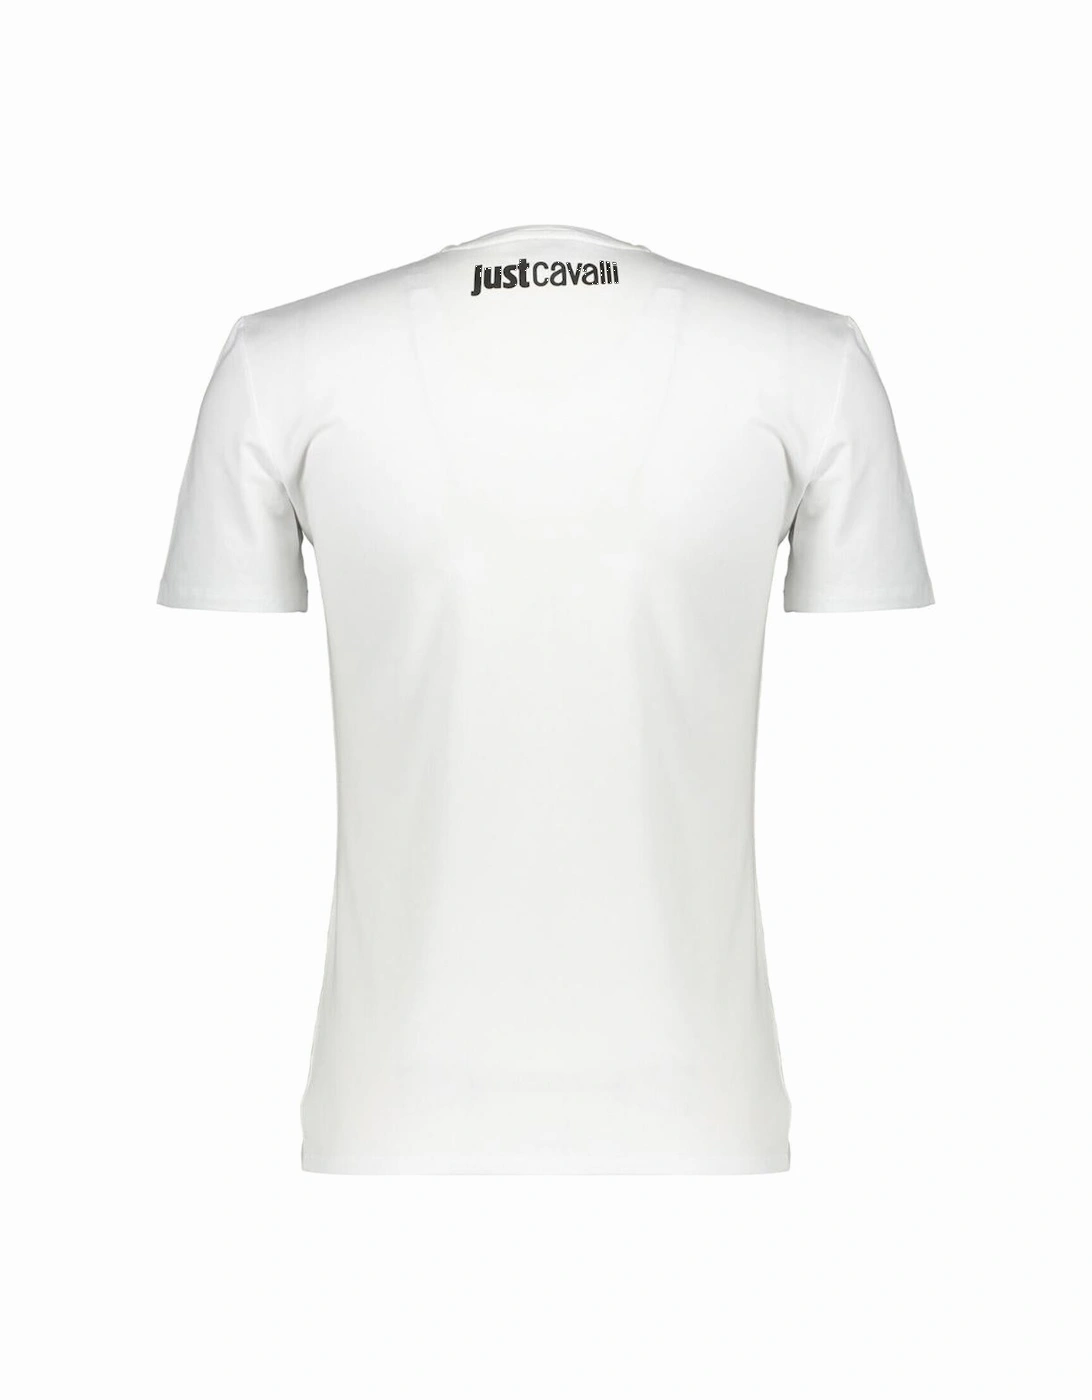 Snake Wrapped Logo White T-Shirt